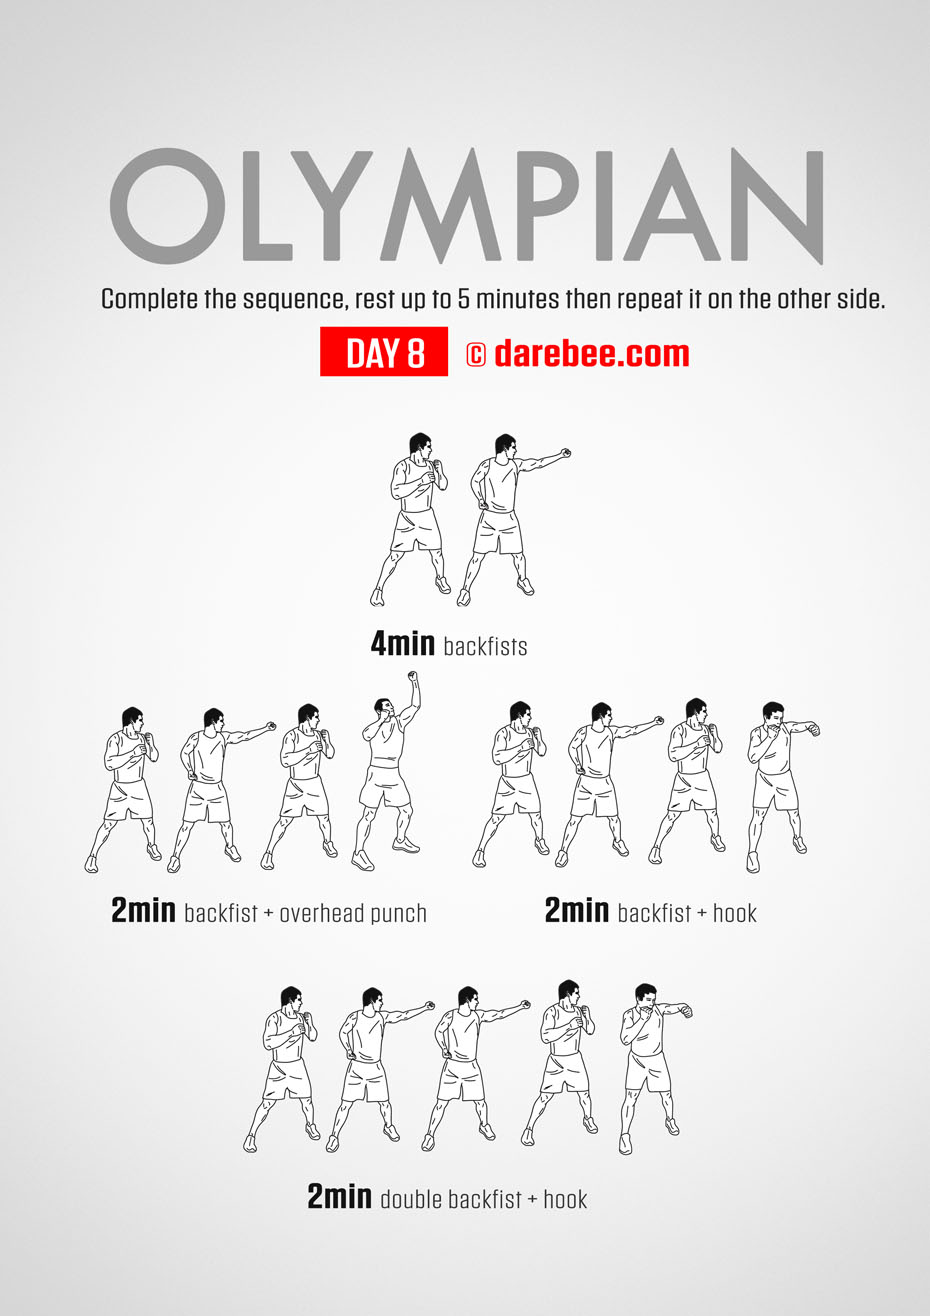 The Olympian - No-Equipment Fitness Program by DAREBEE